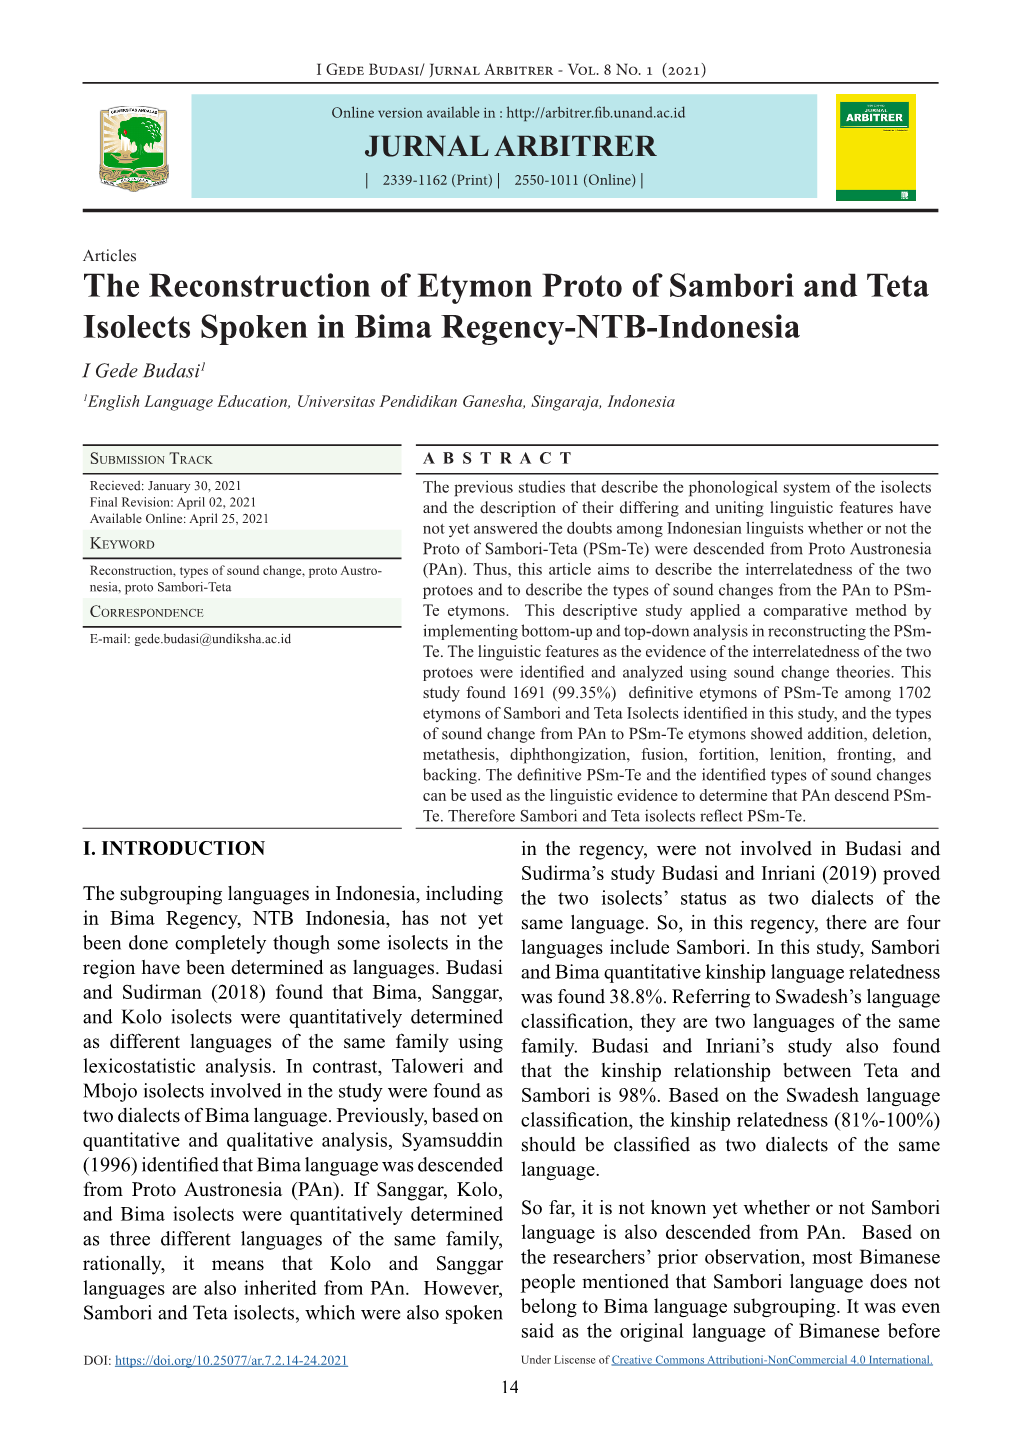 The Reconstruction of Etymon Proto of Sambori and Teta Isolects Spoken